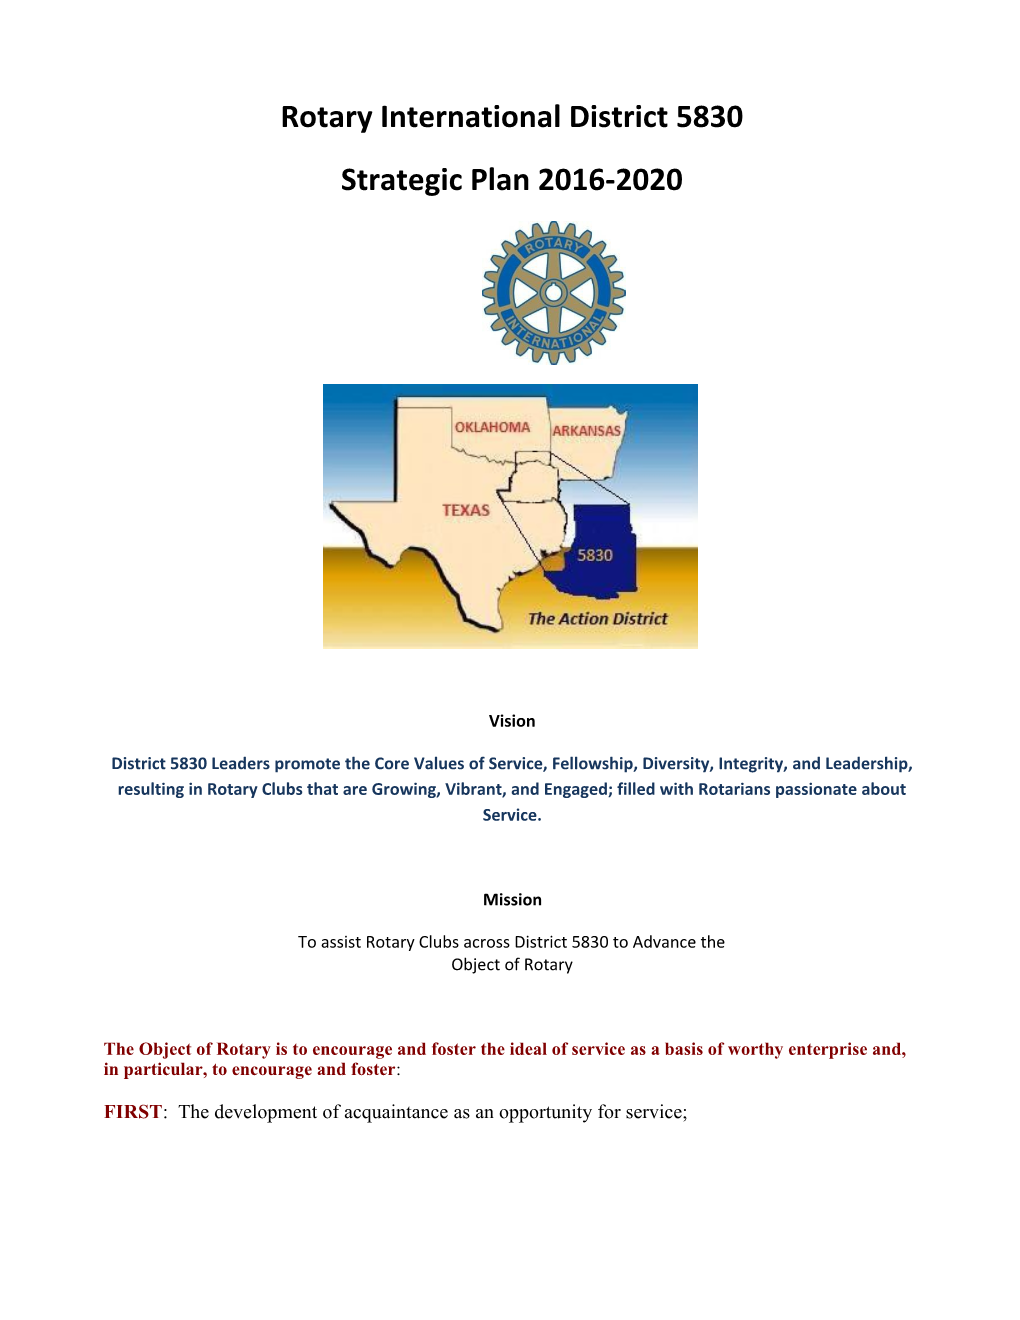 Rotary International District 5830 Strategic Plan 2016-2020